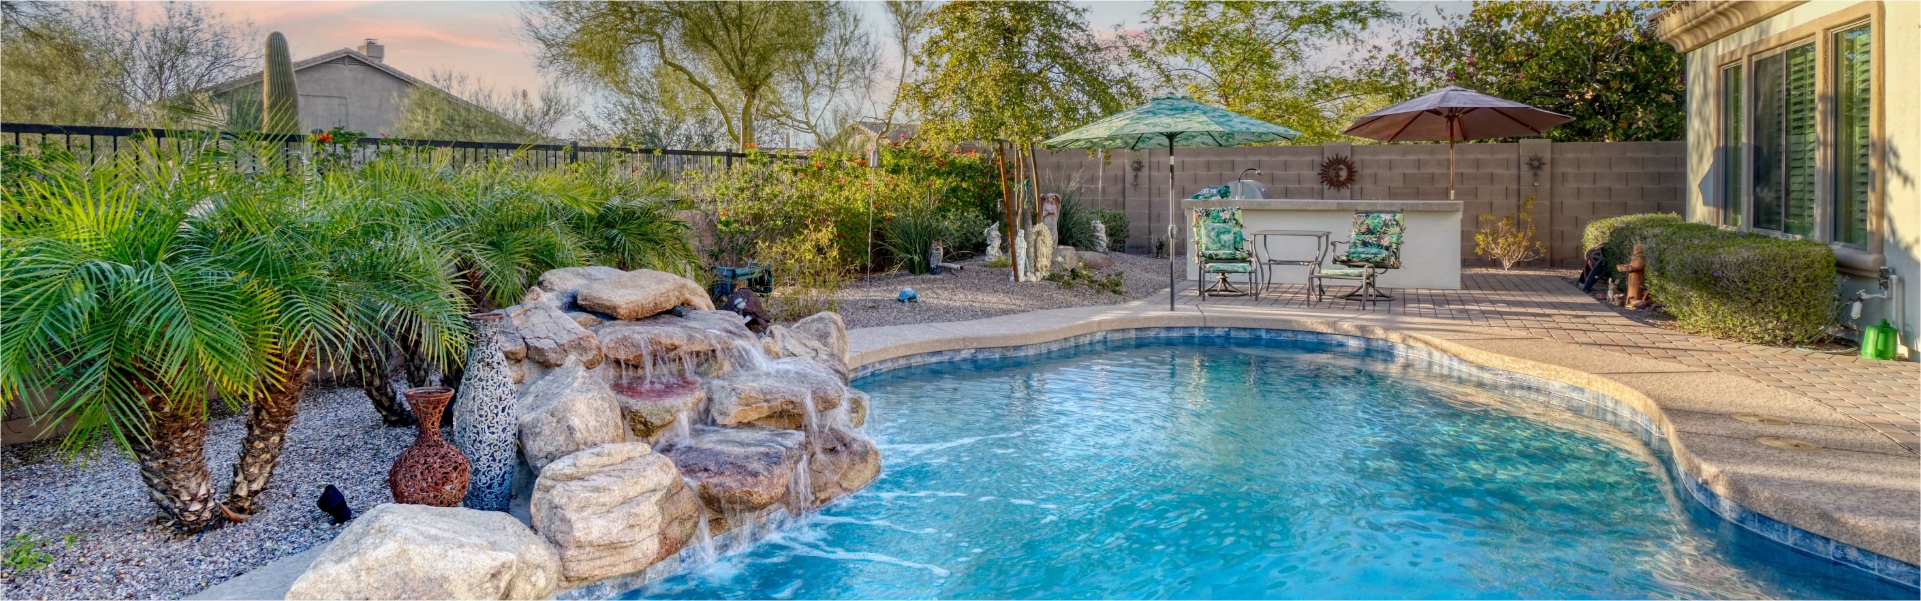 Desert home backyard with pool